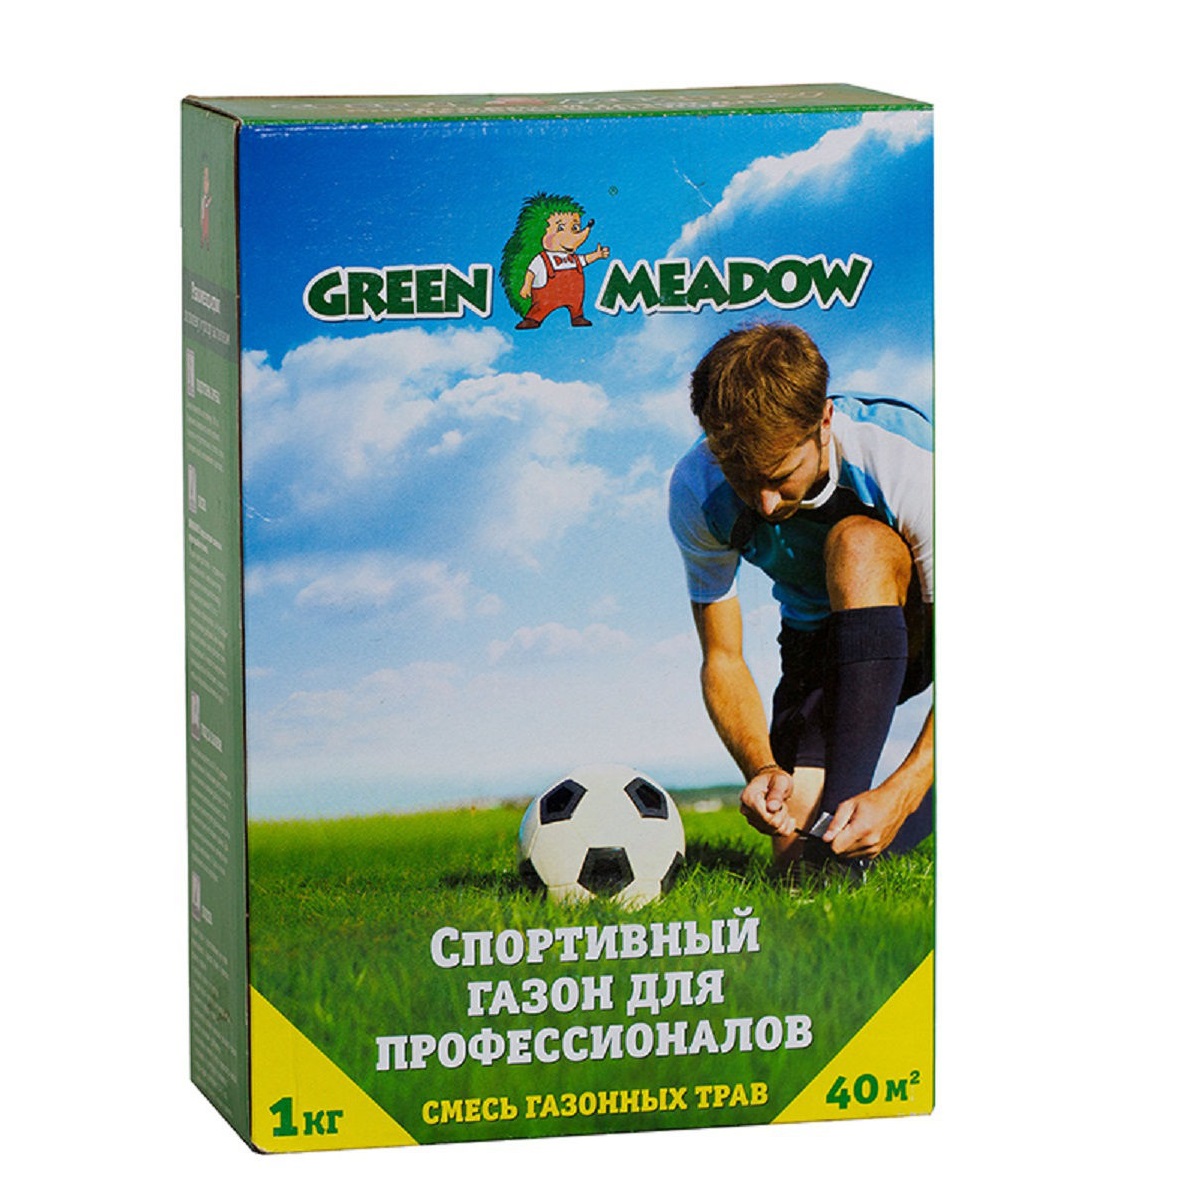 Газон Green Meadow спорт для профессионалов 1 кг газон green meadow powerseed быстрый ремонт 1 кг